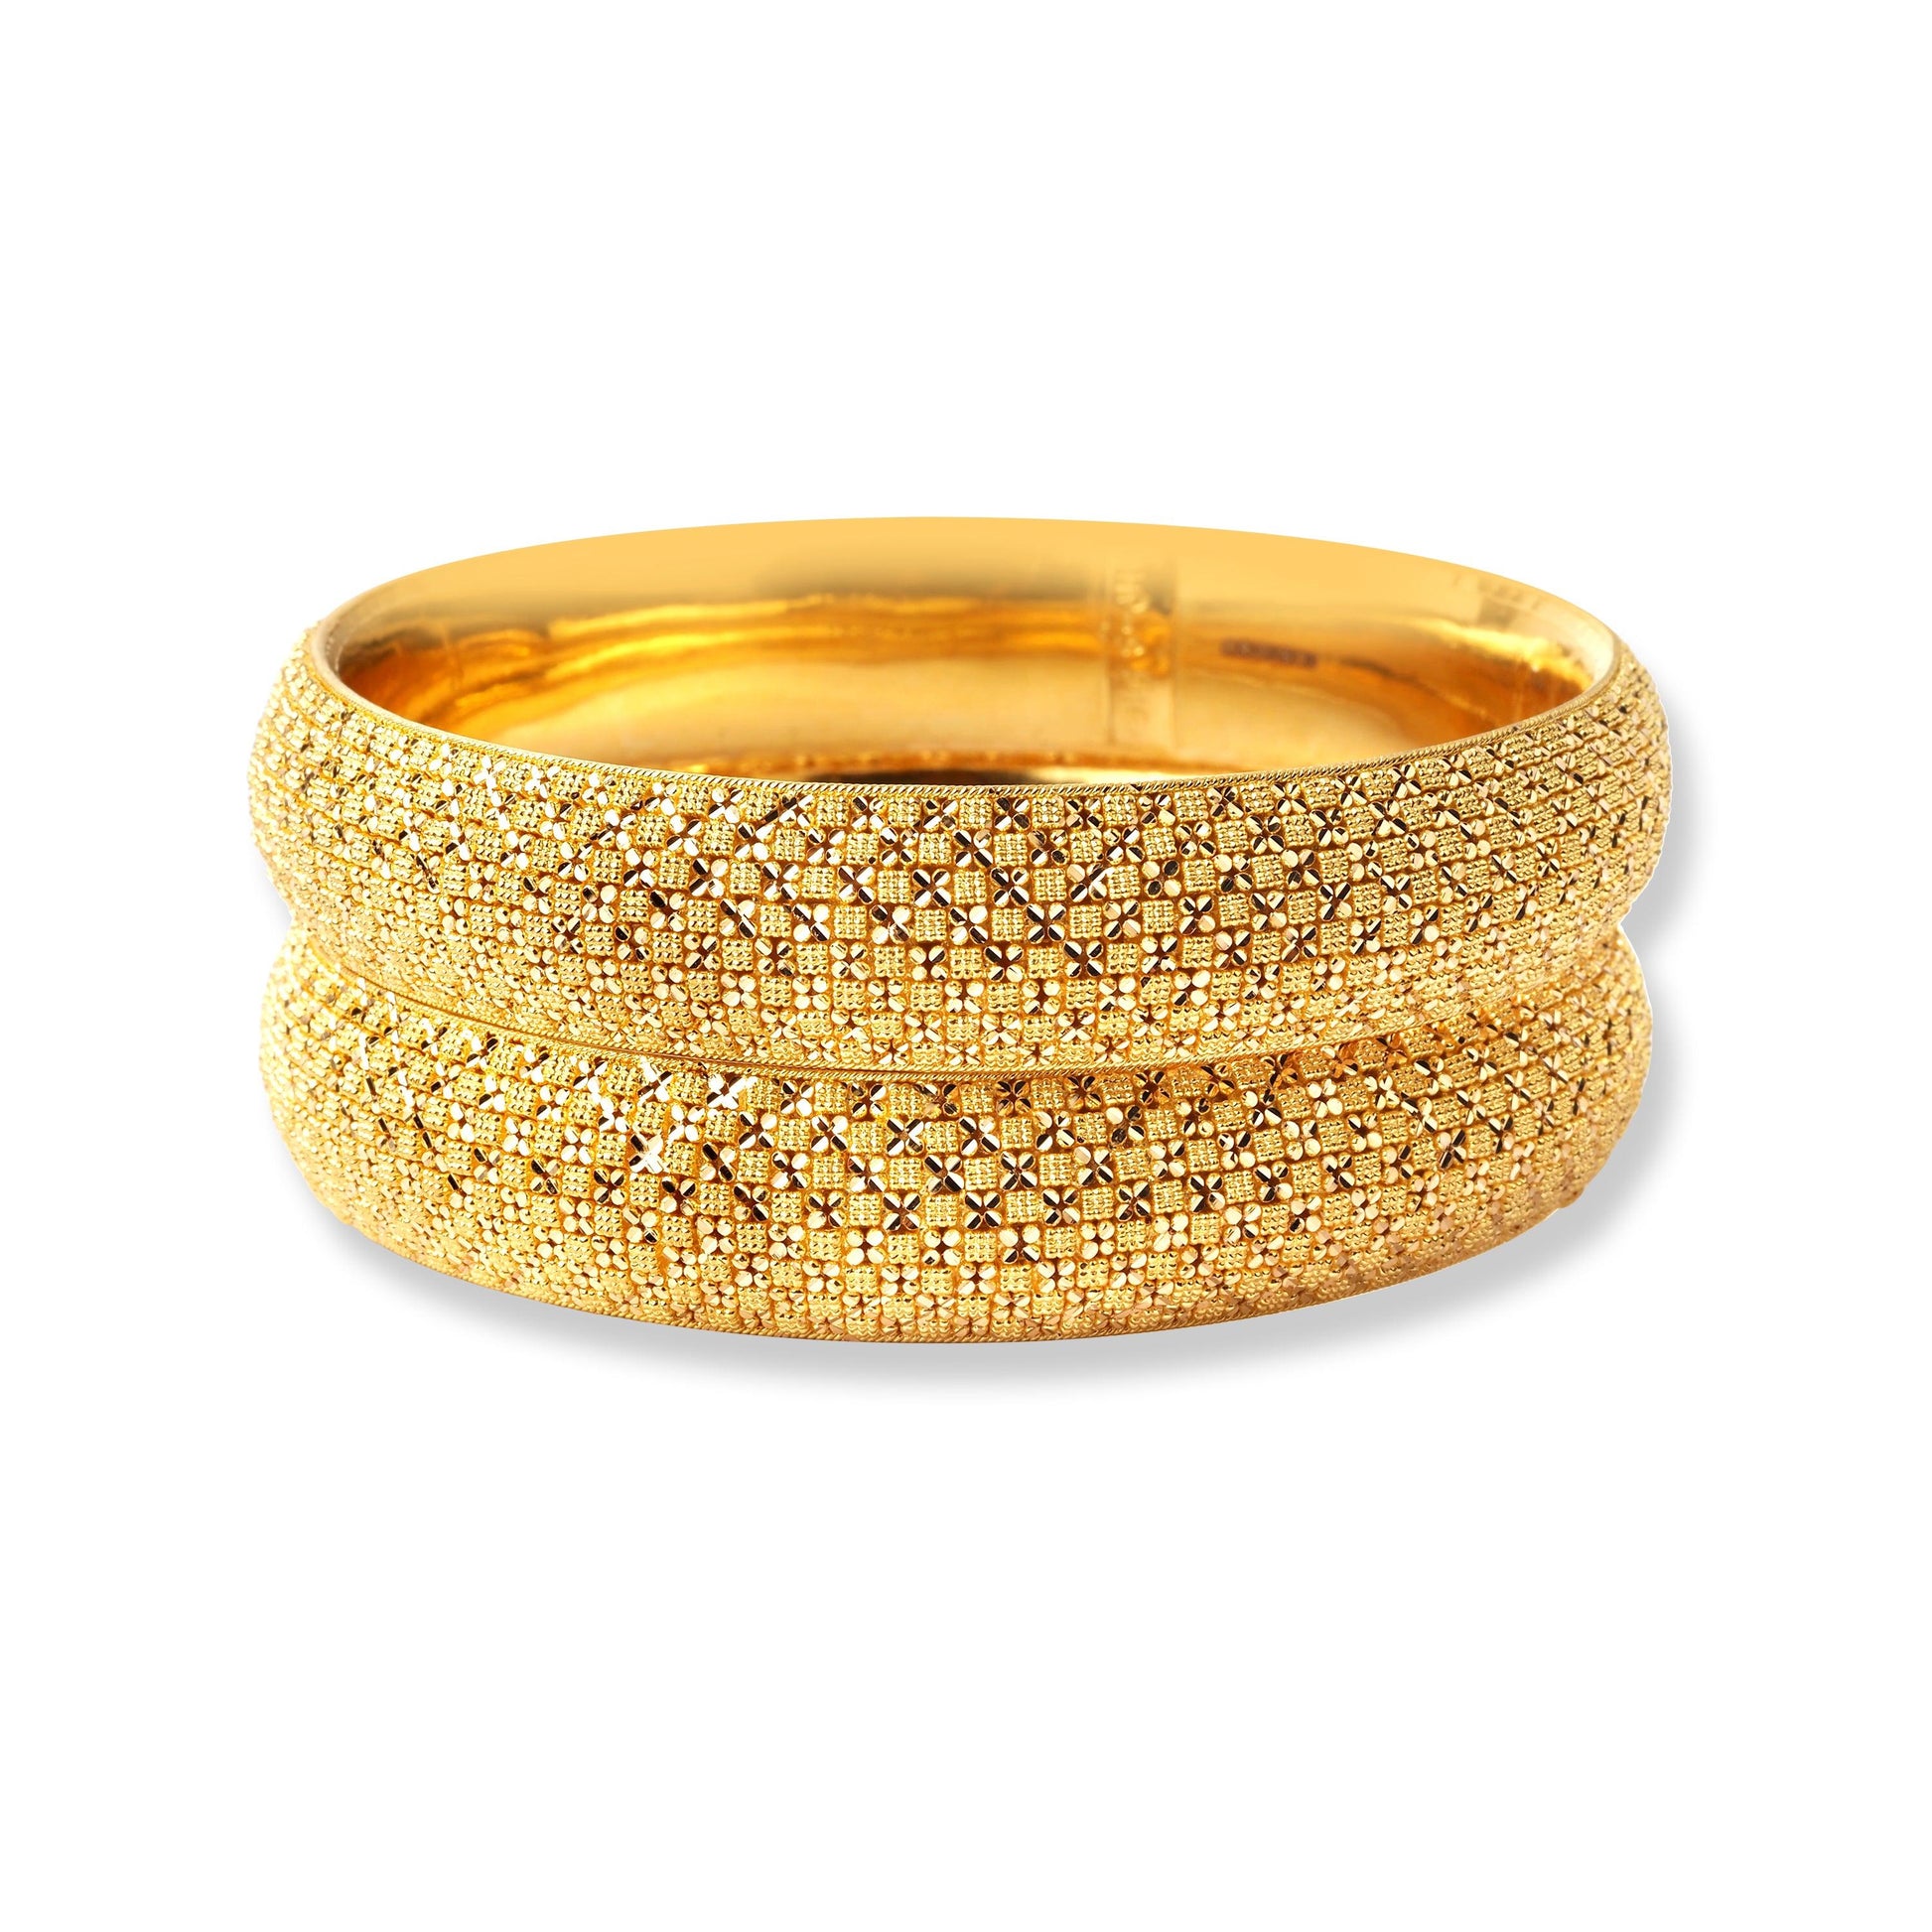 Pair of 22ct Gold Filigree Design Bangles (74.23g) B-8505 - Minar Jewellers